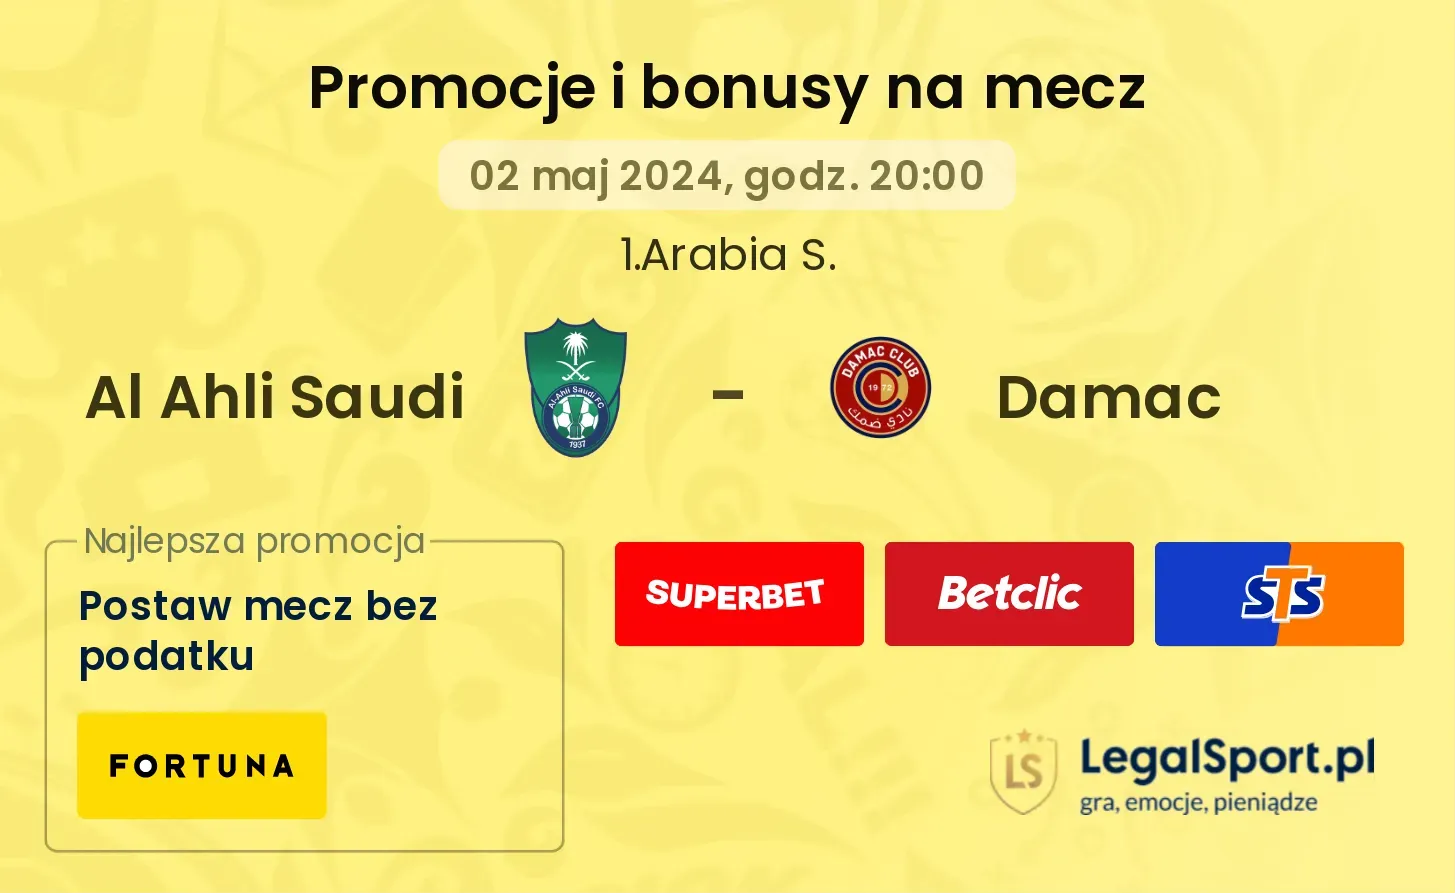 Al Ahli Saudi - Damac promocje bonusy na mecz